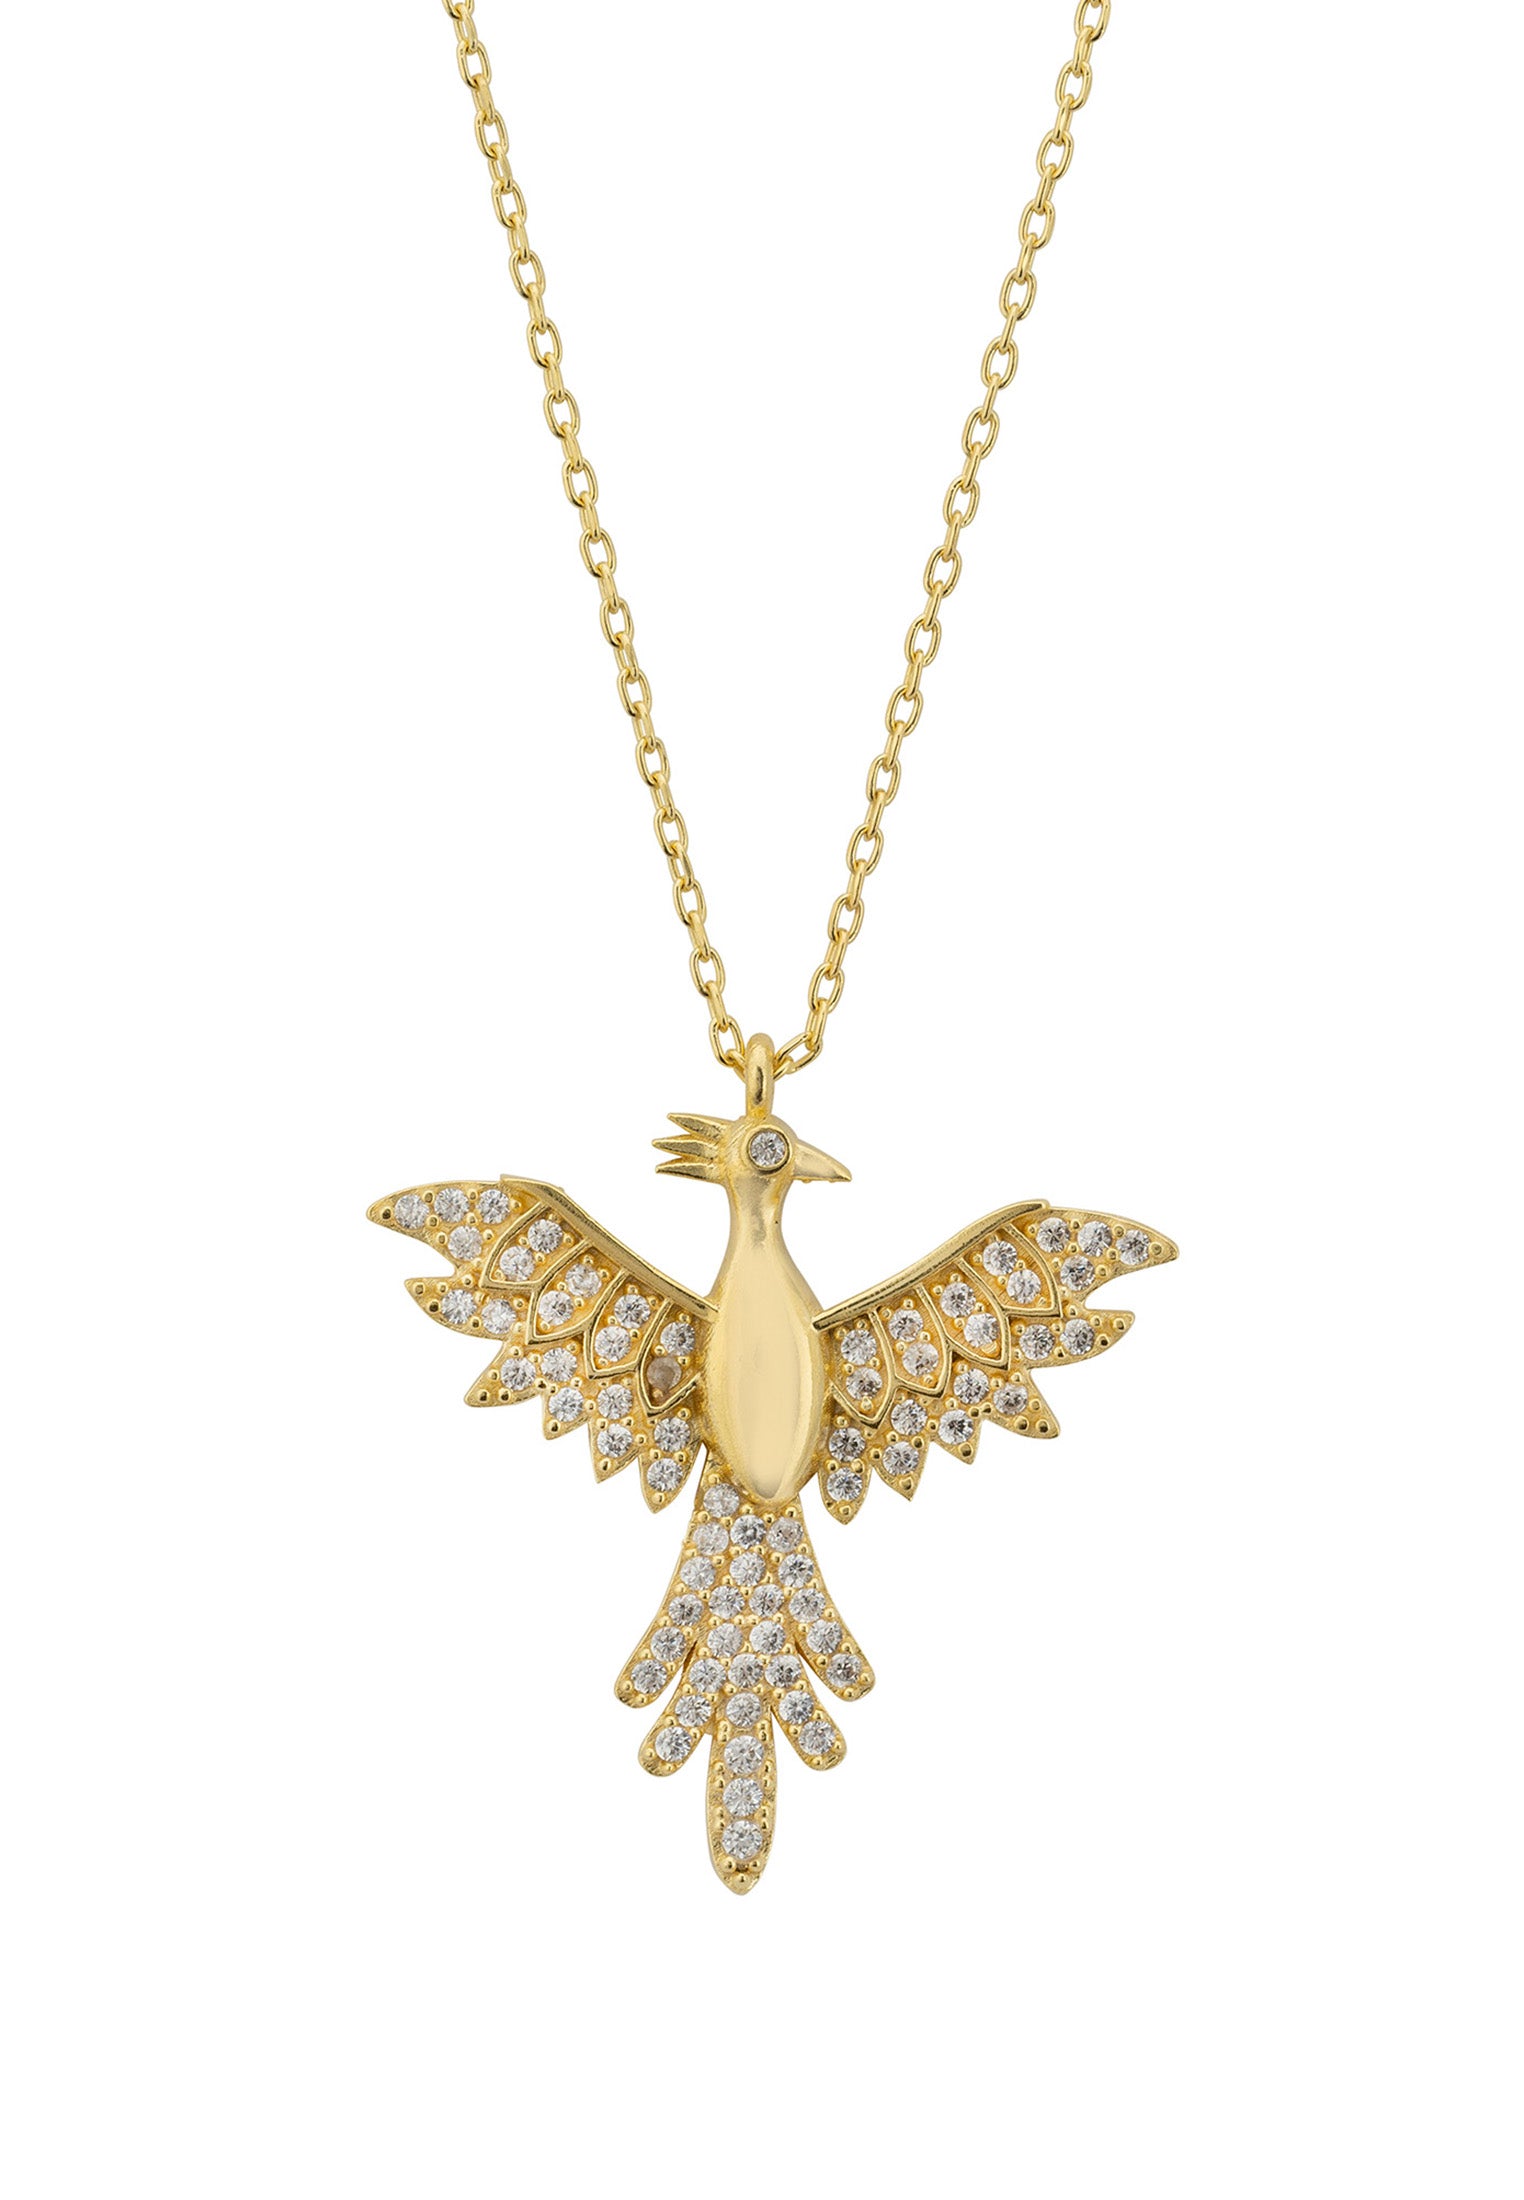 Rising Phoenix Bird Pendant Necklace Gold